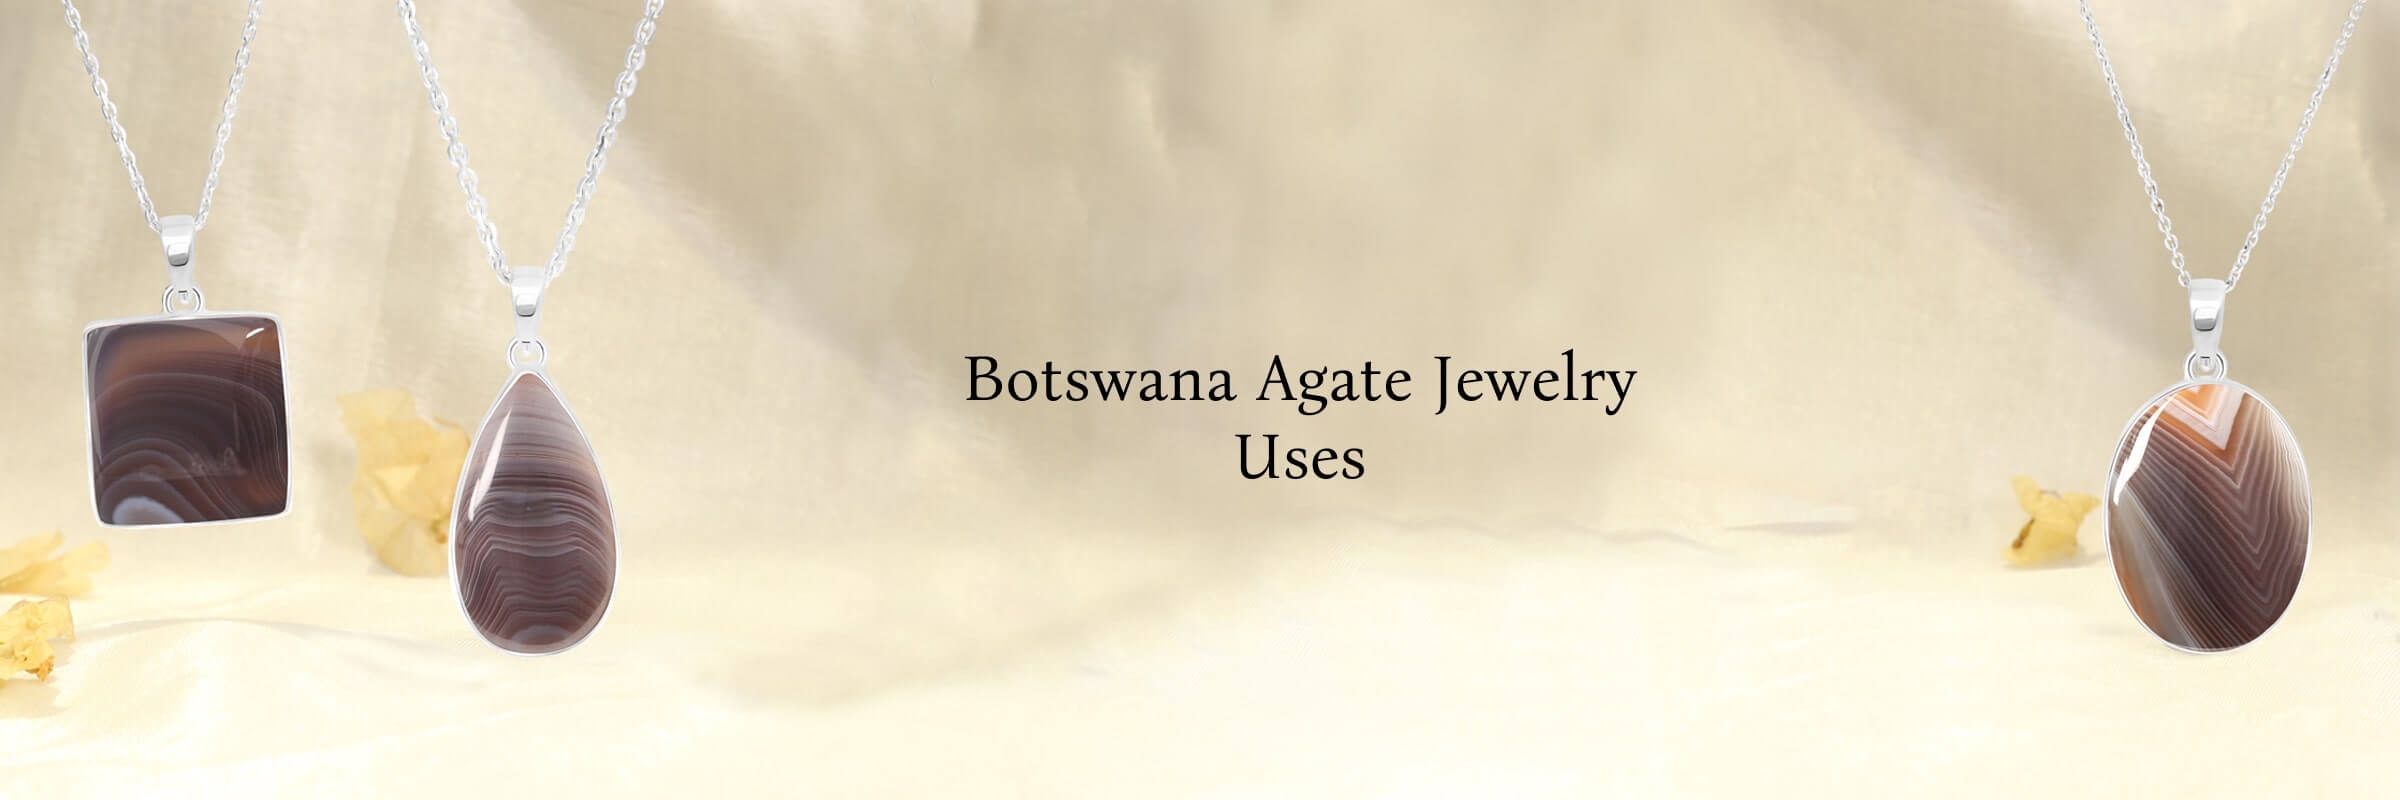 Botswana Agate Uses